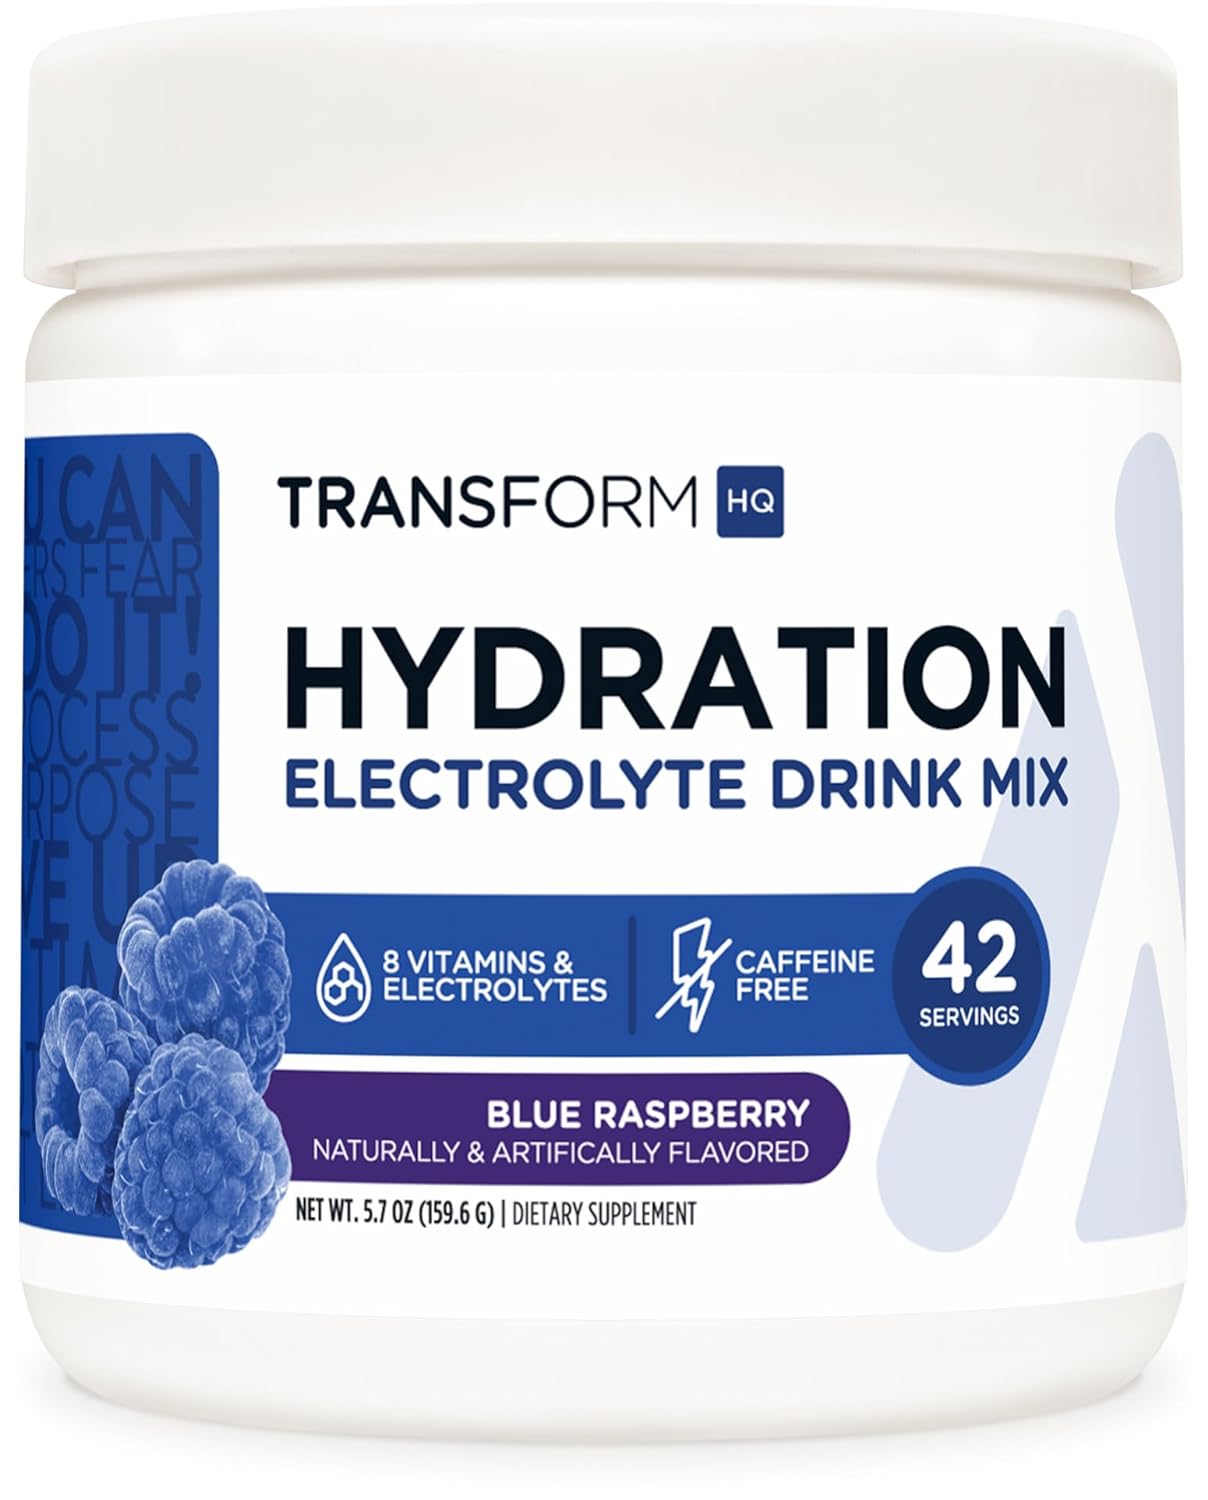 TransformHQ Hydration 42 Servings (Blue Raspberry) - Electrolytes, Men